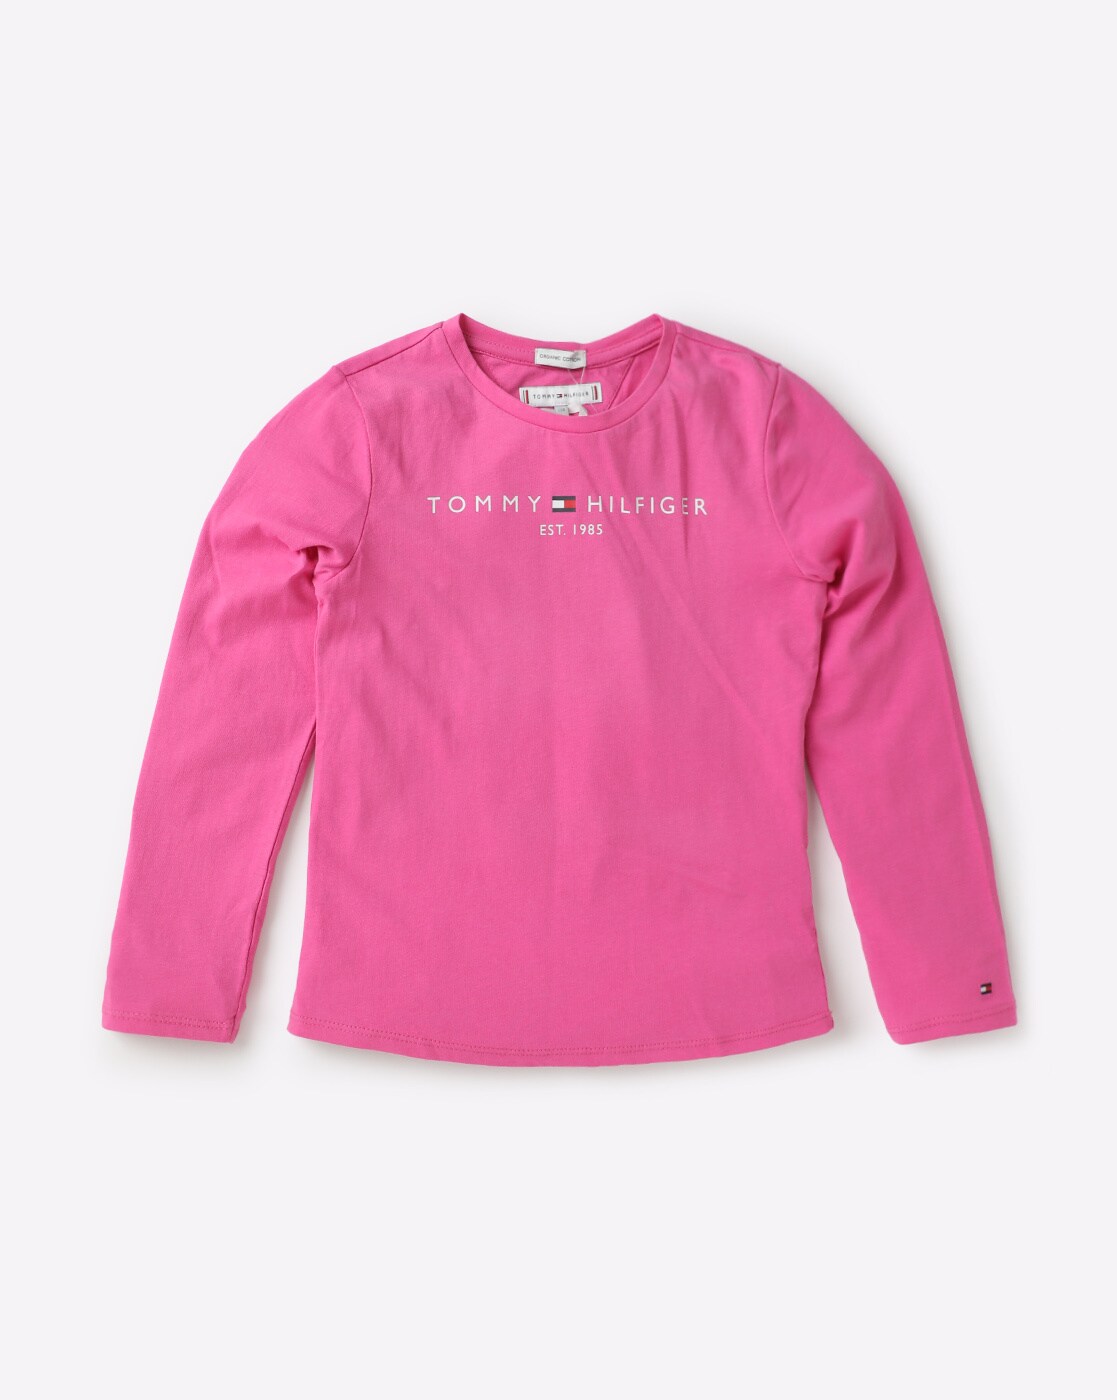 Super willkommen Buy Pink Tshirts for HILFIGER Online TOMMY Girls by